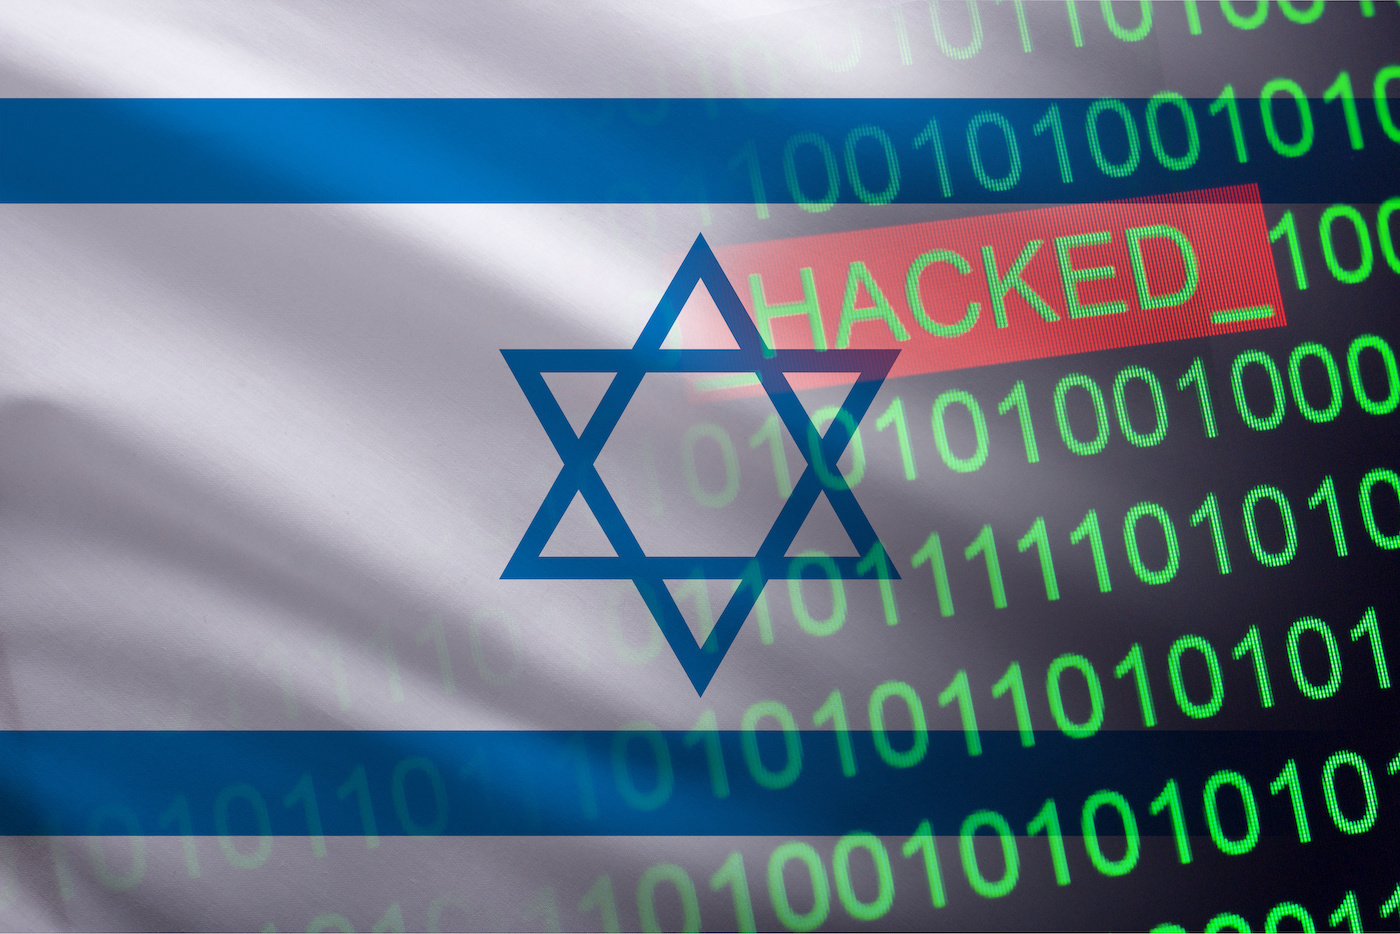 New DDoS attacks on Israel’s enterprises should be a wake-up call